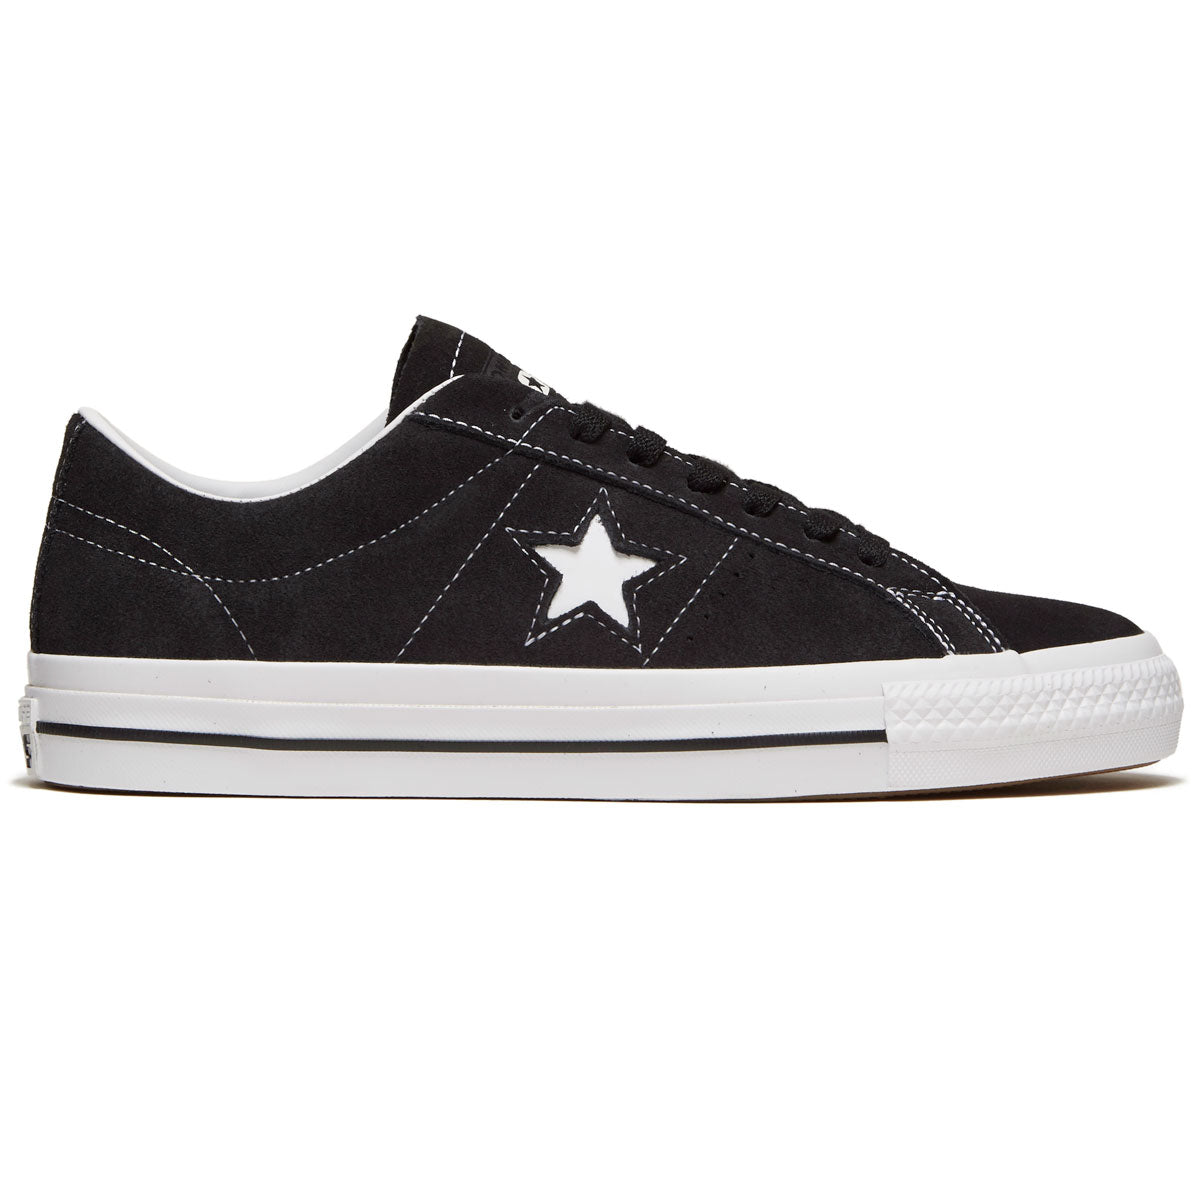 Converse One Star Pro Ox Shoes - Black/Black/White – CCS